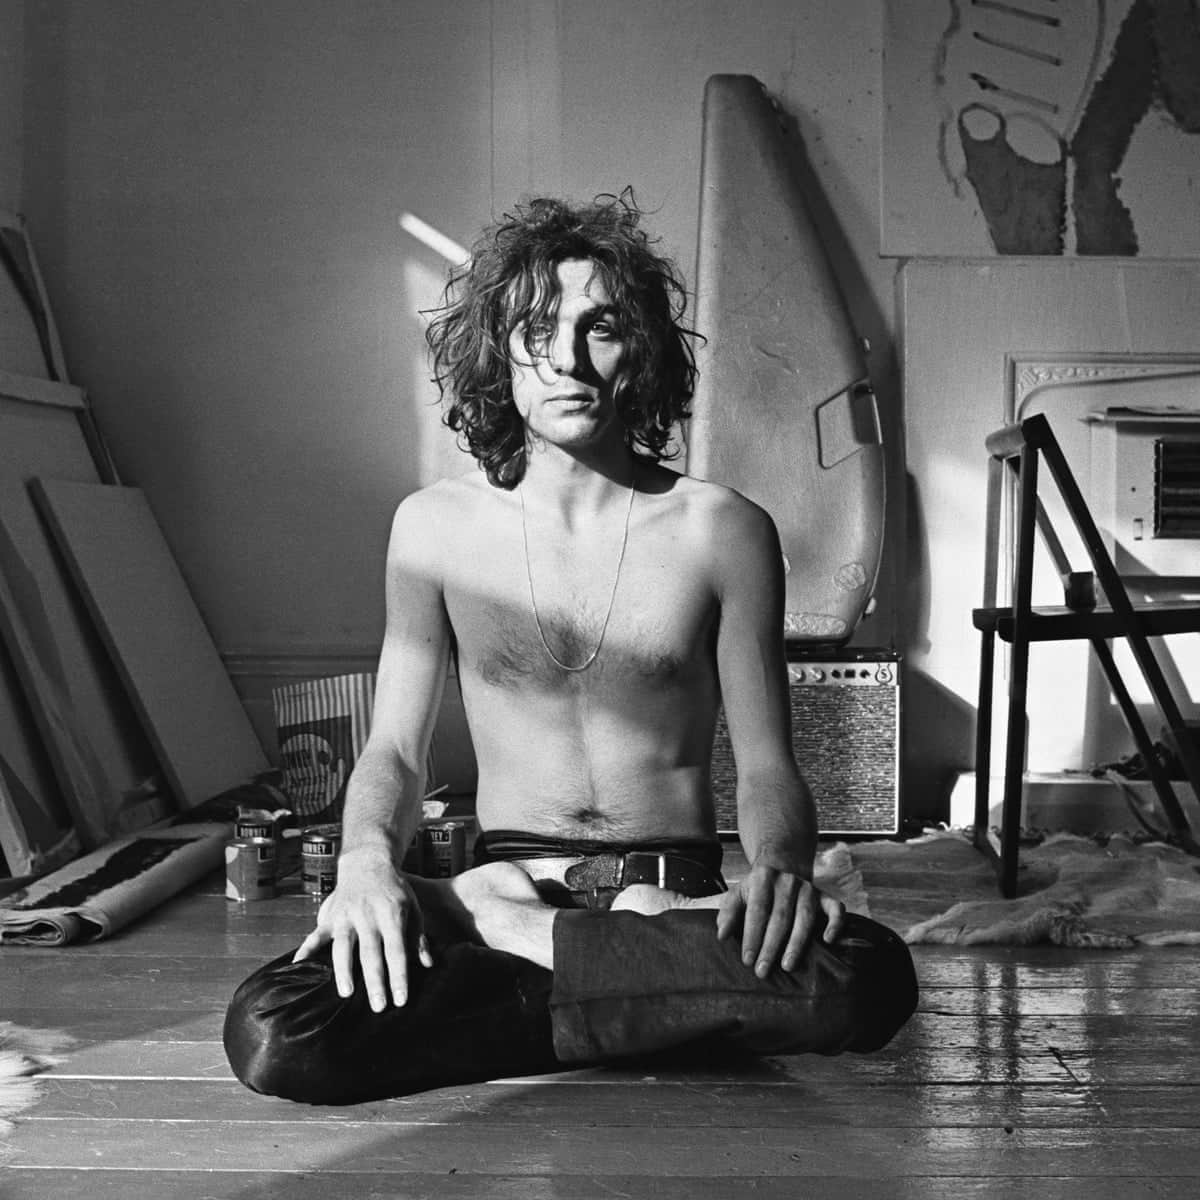 La biographie de Syd Barrett | Membre fondateur de Pink Floyd